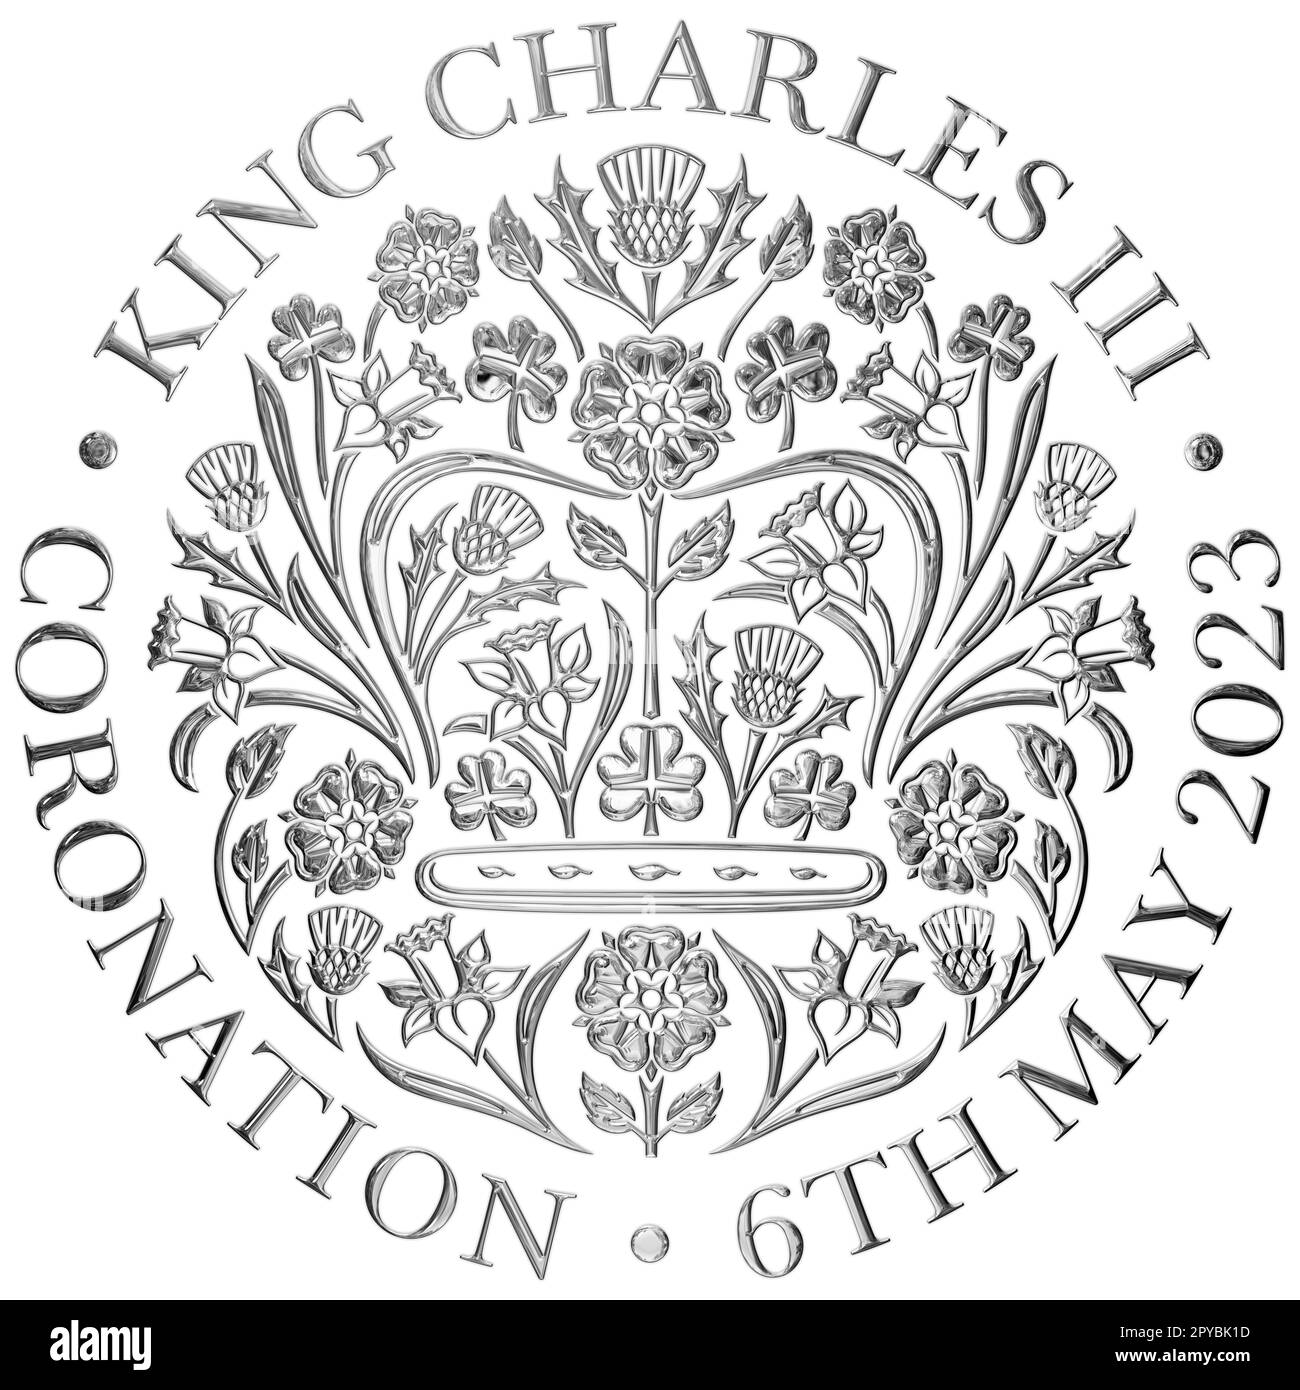 London, United kingdom, may 2023, Charles Third Coronation silver metallic symbol, UK, illustration Stock Photo